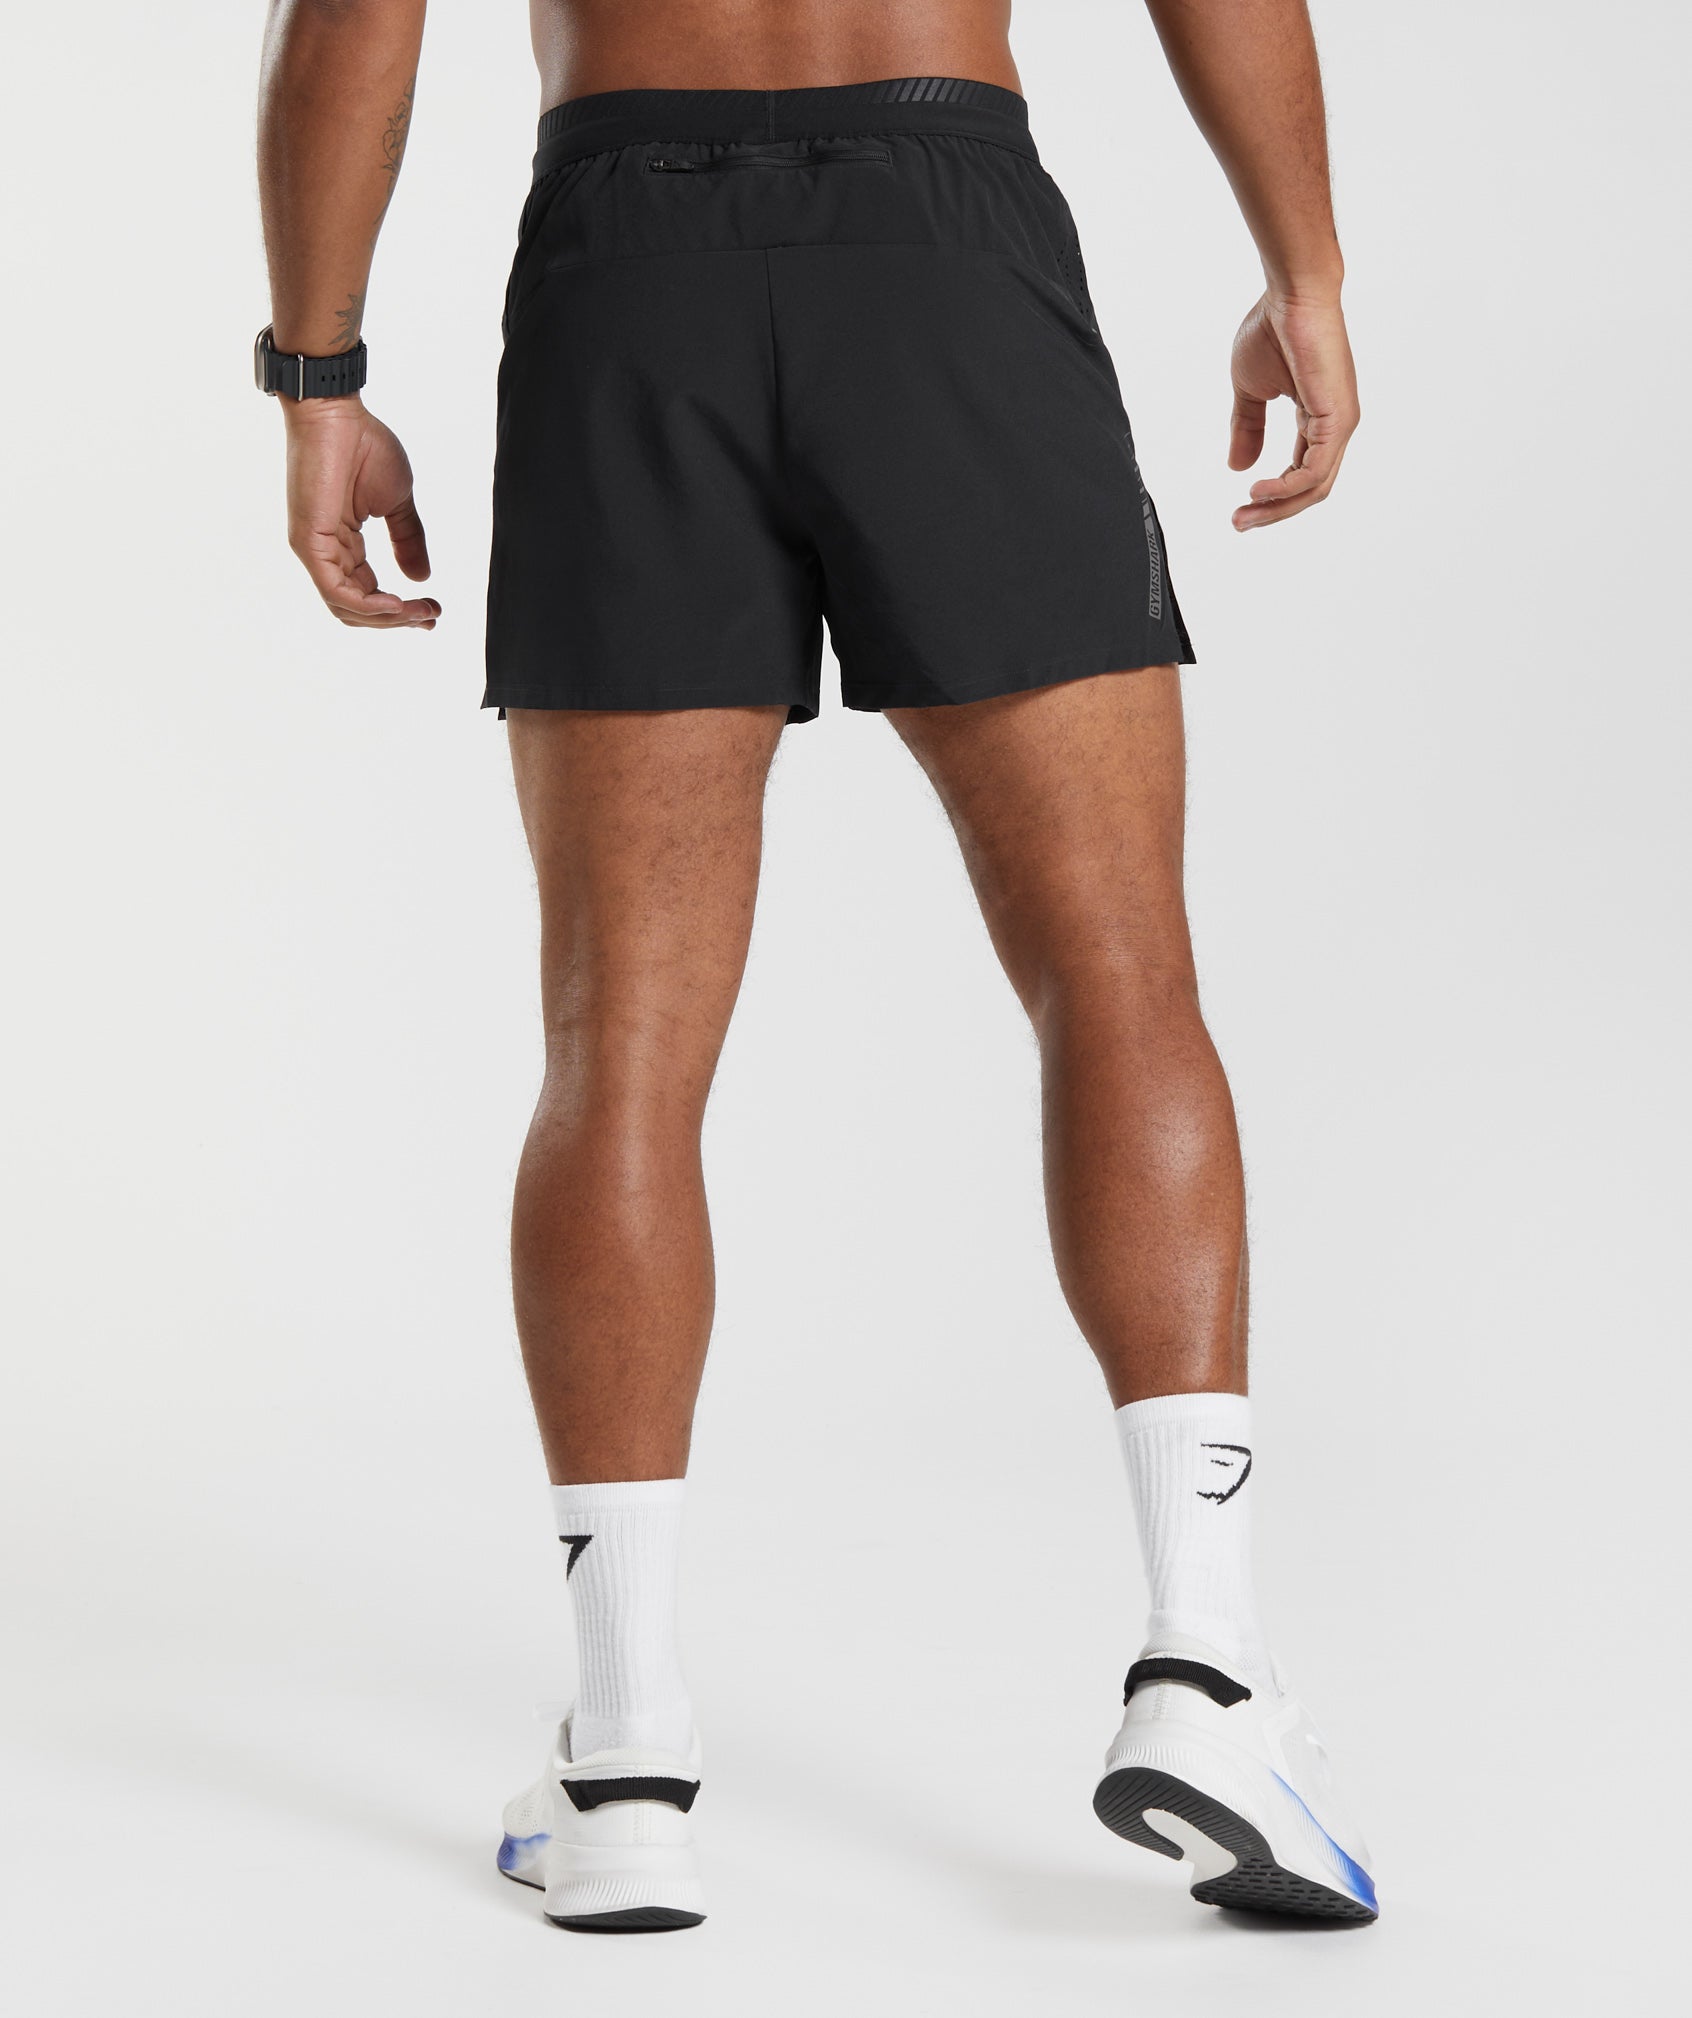 Gymshark Apex 5 Hybrid Shorts - Light Grey